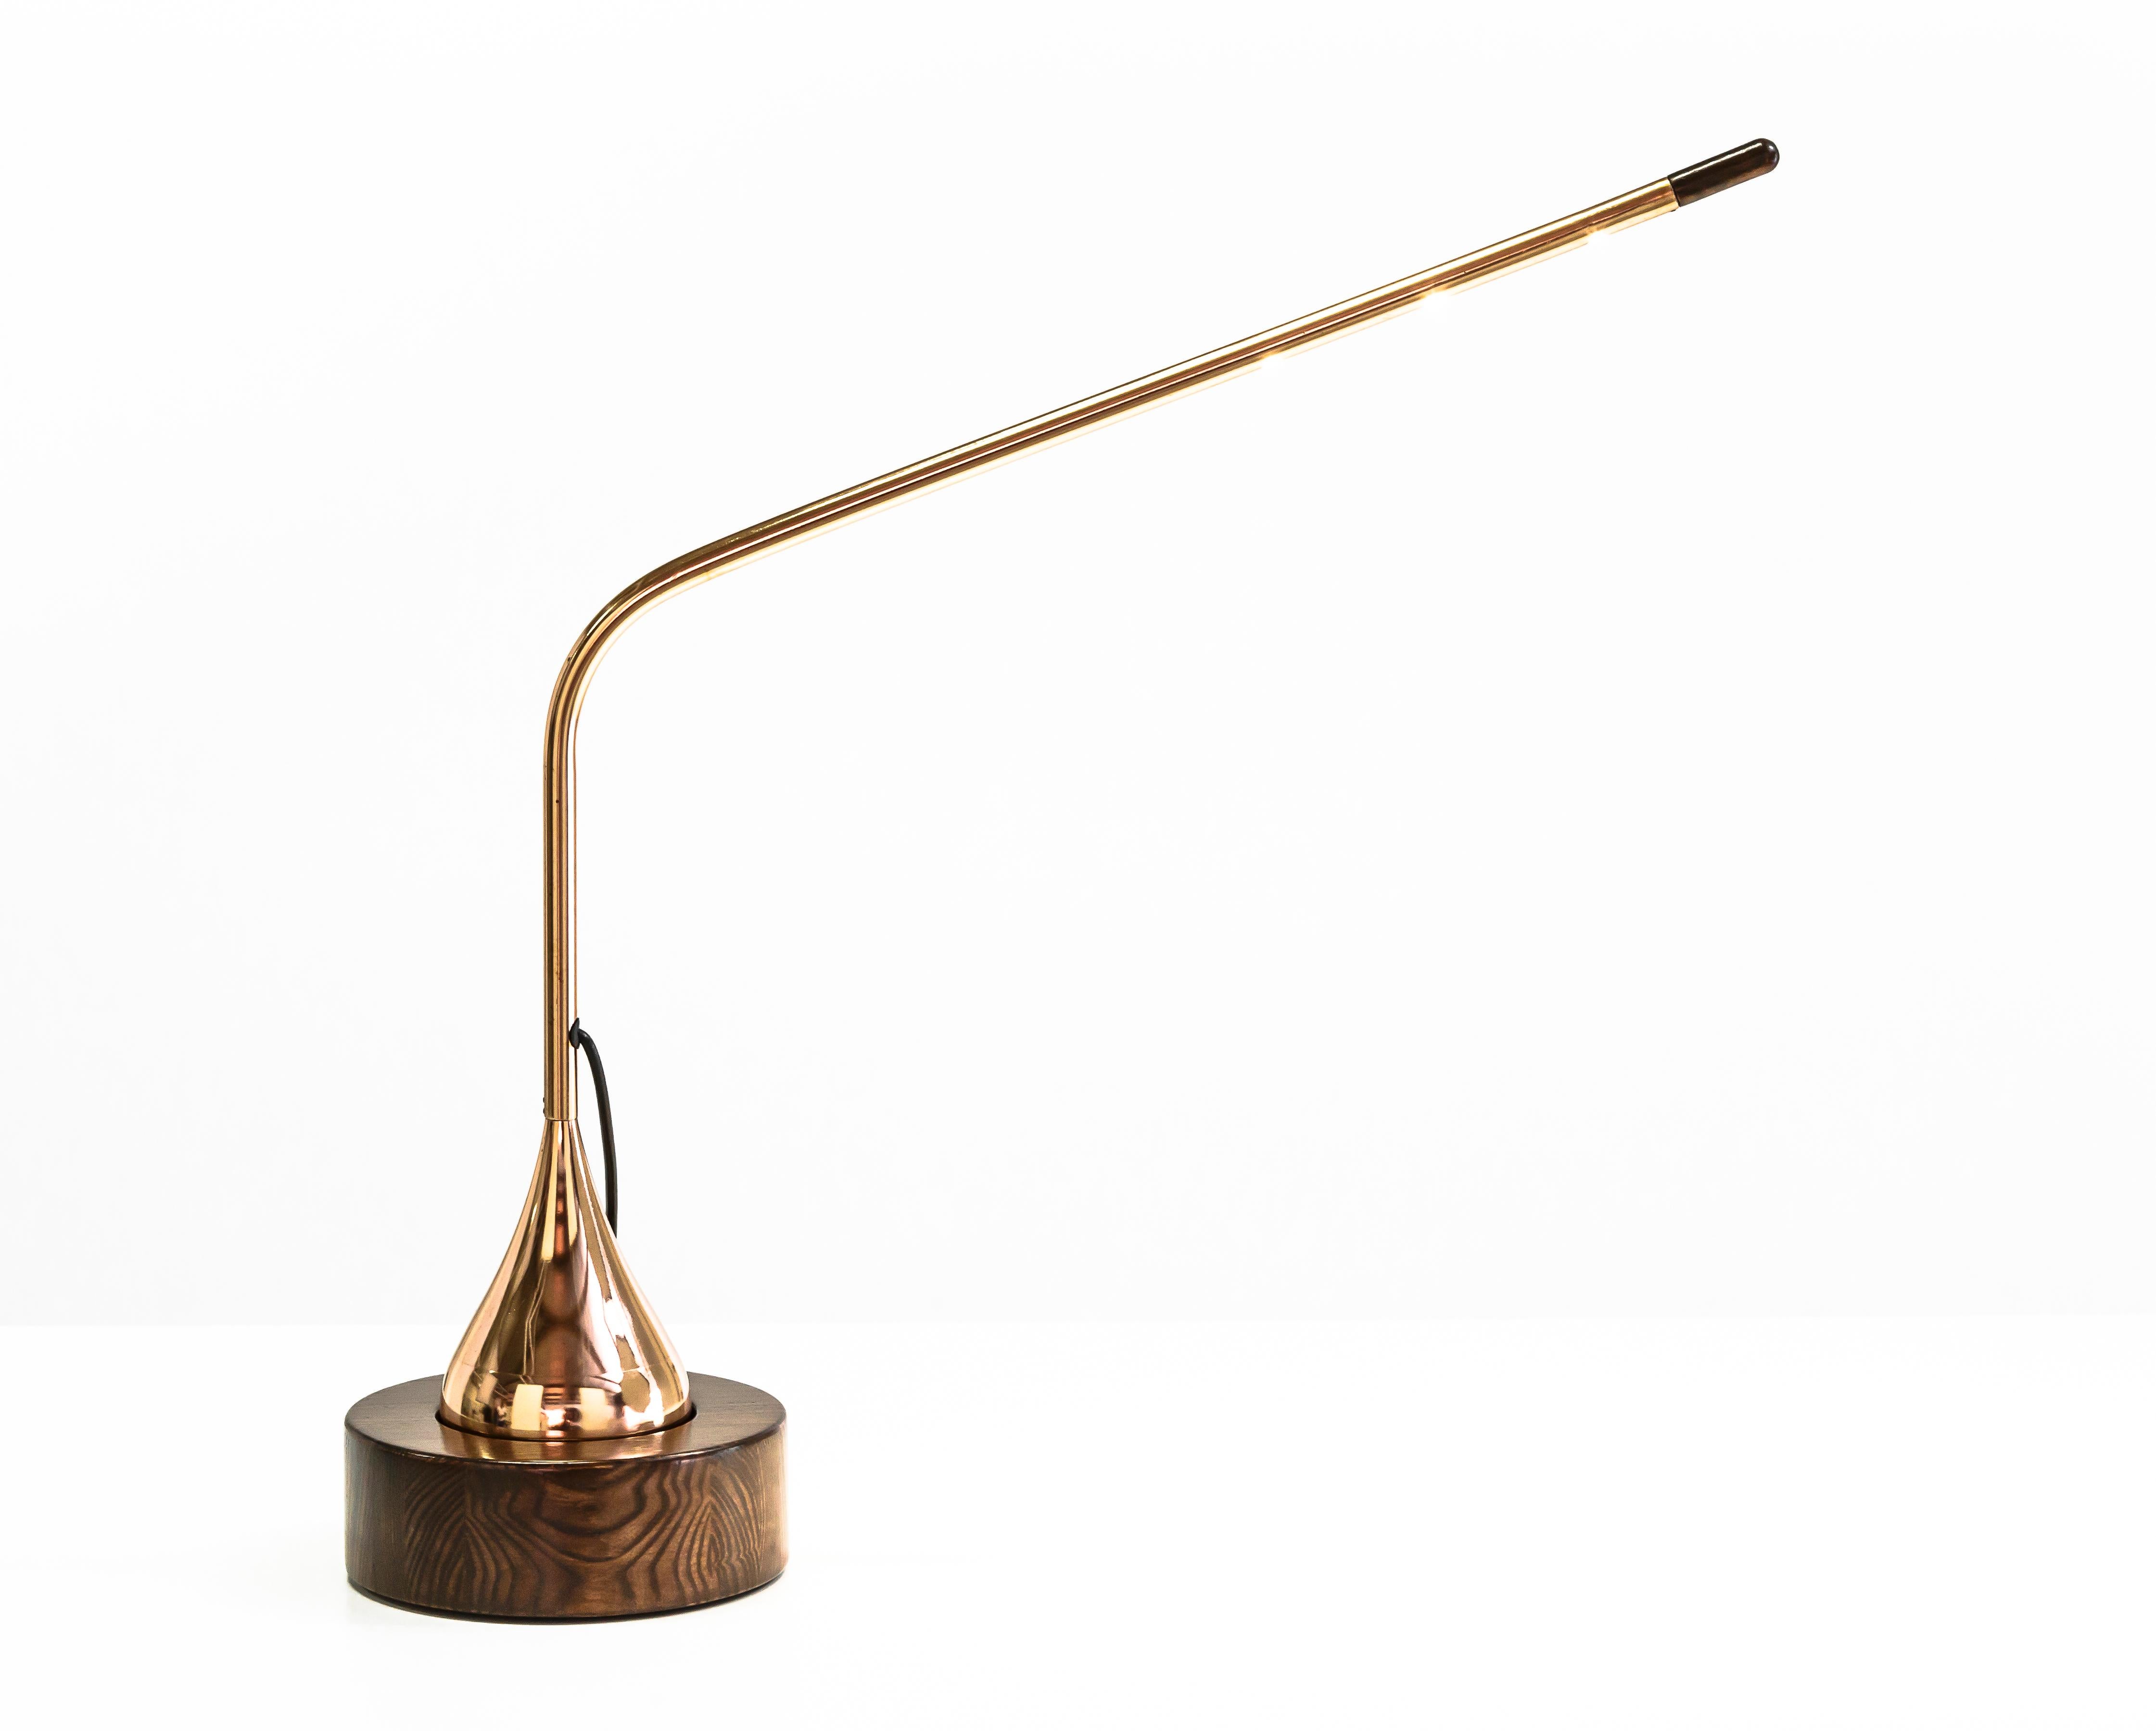 Modern Mortar & Pestle Table Lamp by Egg Designs